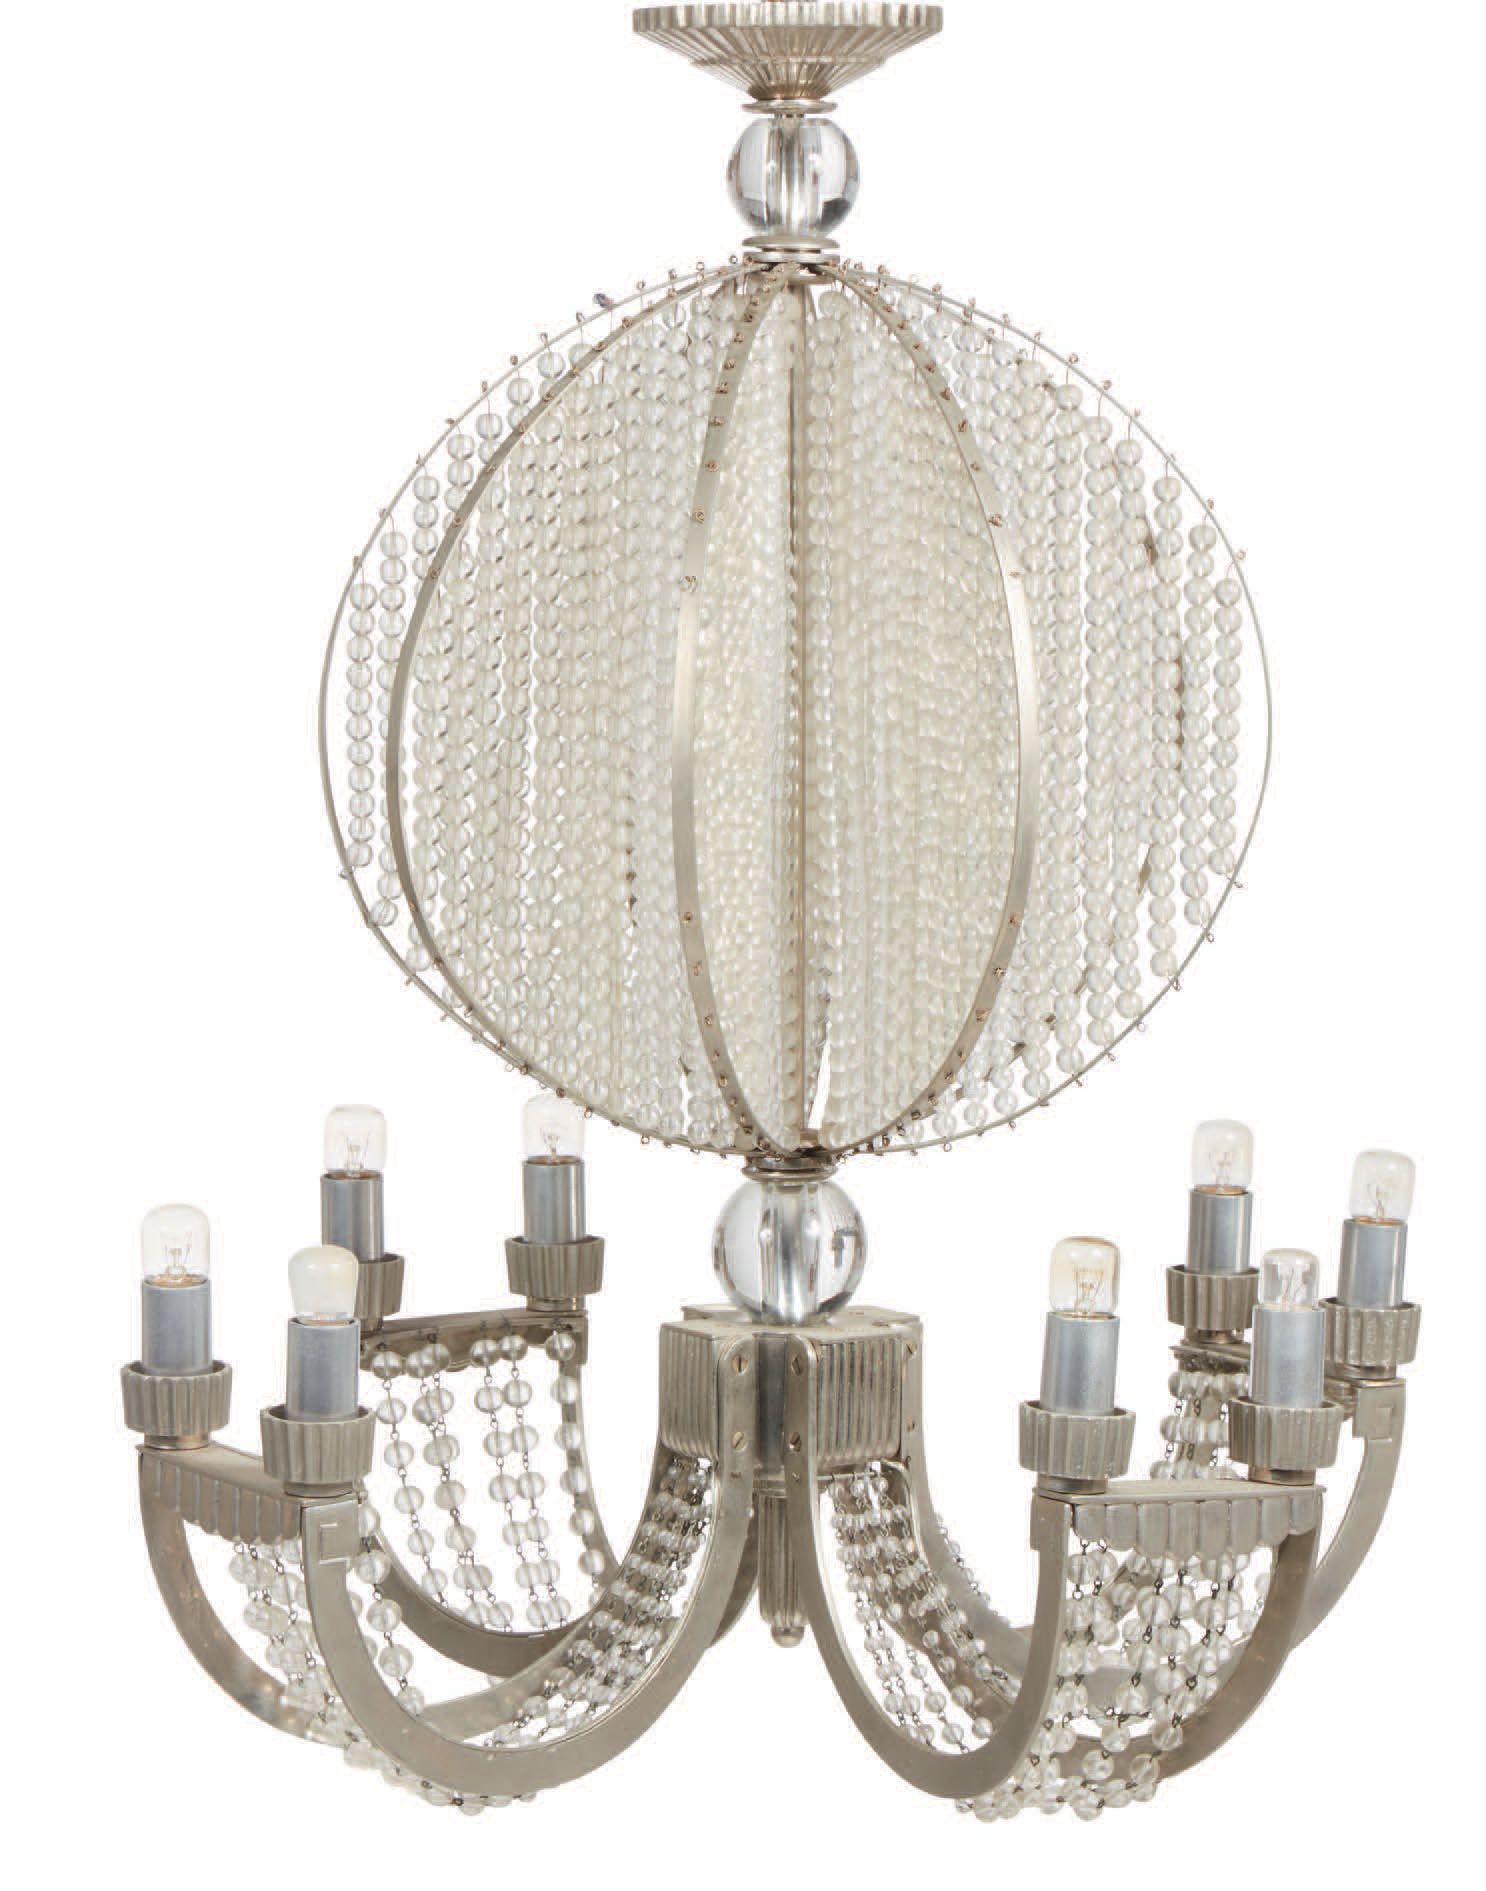 TRAVAIL FRANÇAIS 四个灯臂的吊灯，镀银金属结构，装饰有珍珠串
高：67 直径：54厘米